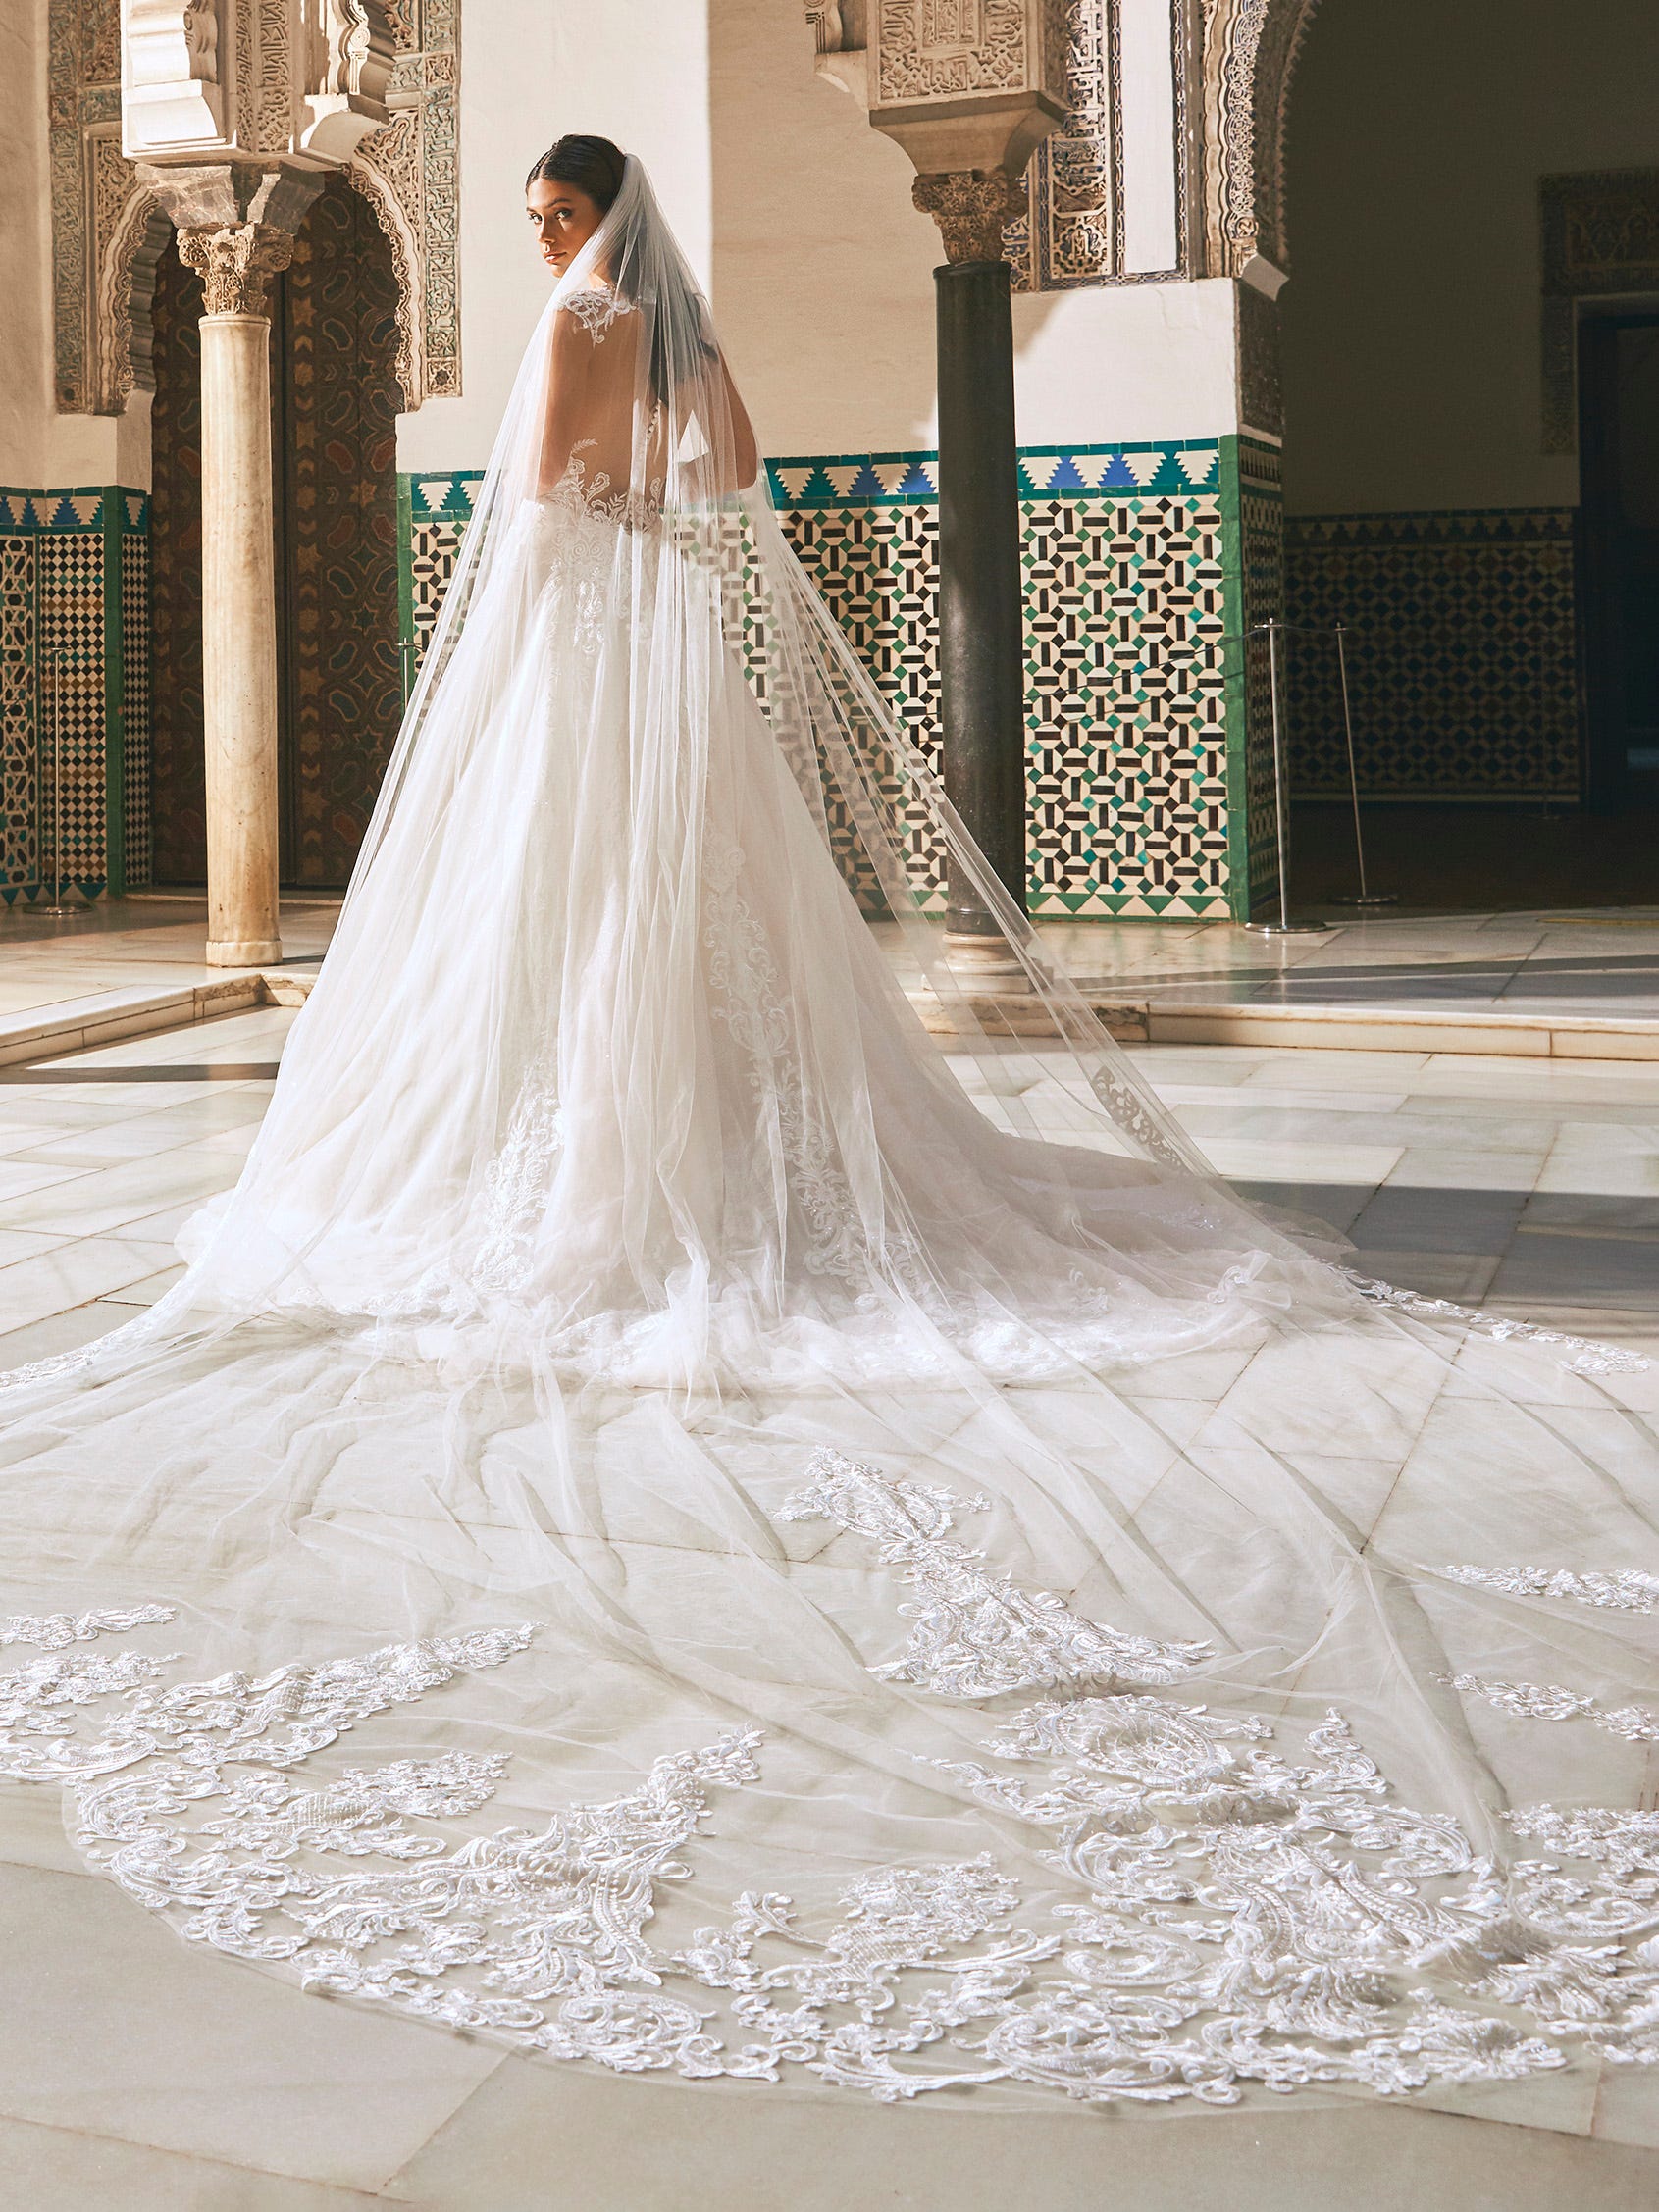 A Guide To Wedding Dress Veils